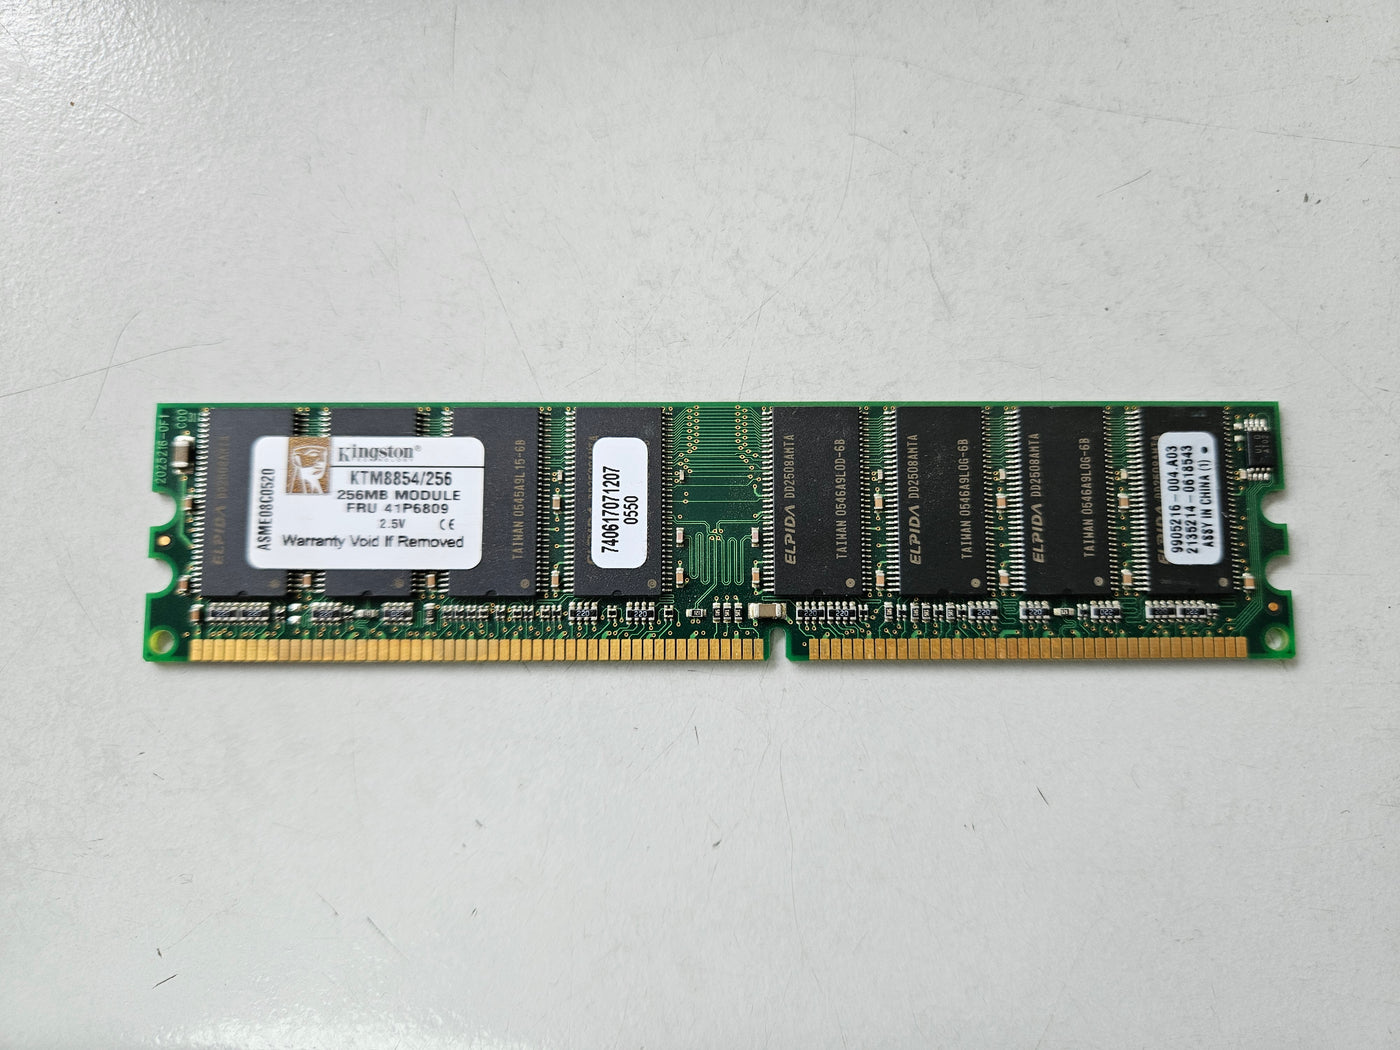 Kingston IBM 256MB PC2700 DDR-333MHz CL2.5 184-Pin DIMM ( KTM8854/256 9905216-004.A03 41P6809 ) REF